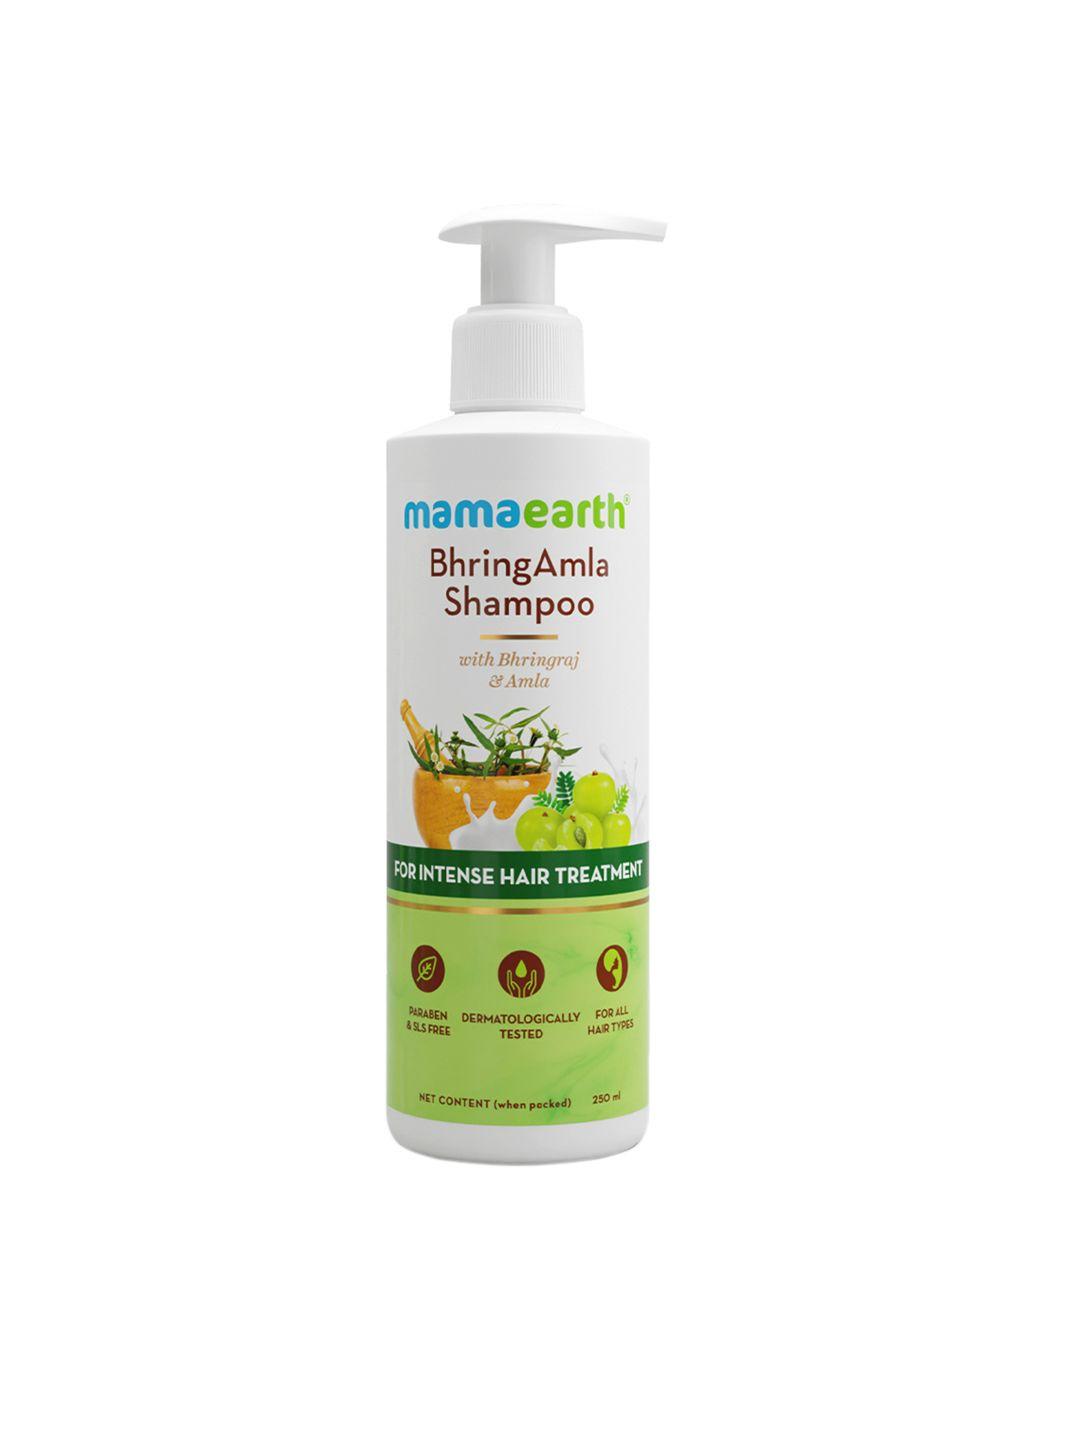 mamaearth bhringamla shampoo with bhringraj & amla for intense hair treatment 250 ml